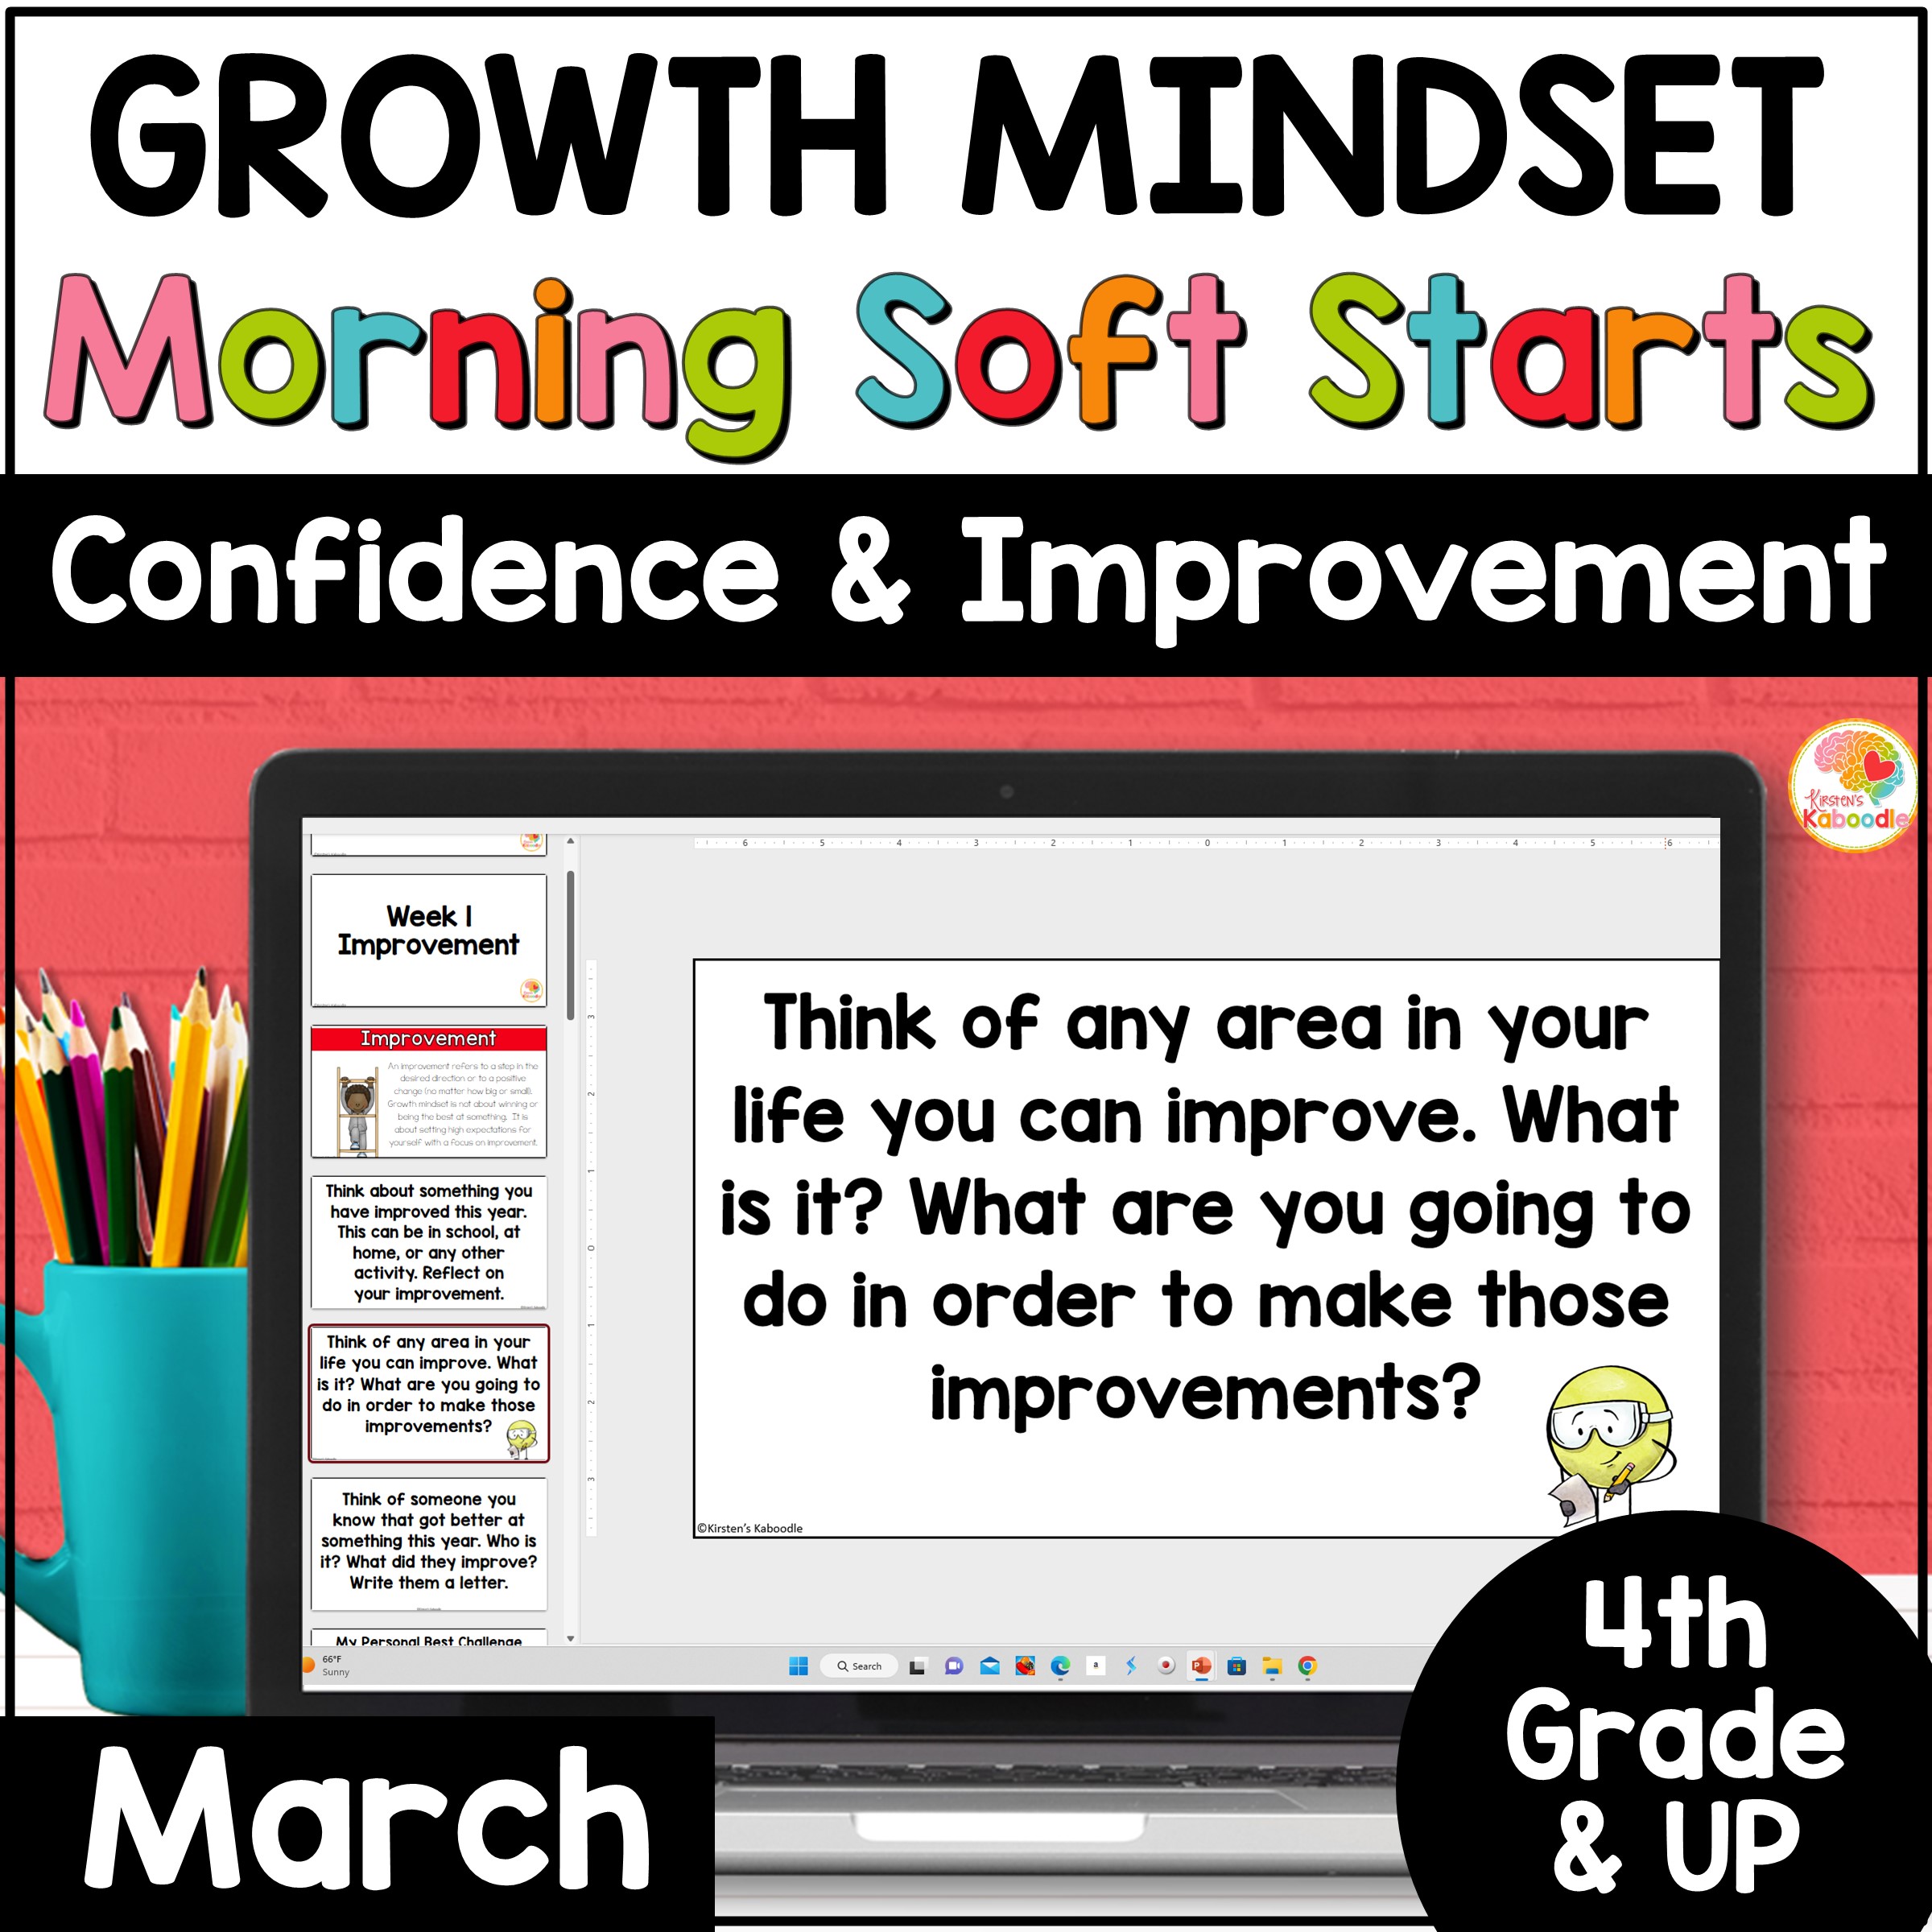 March-growth-mindset-soft-starts